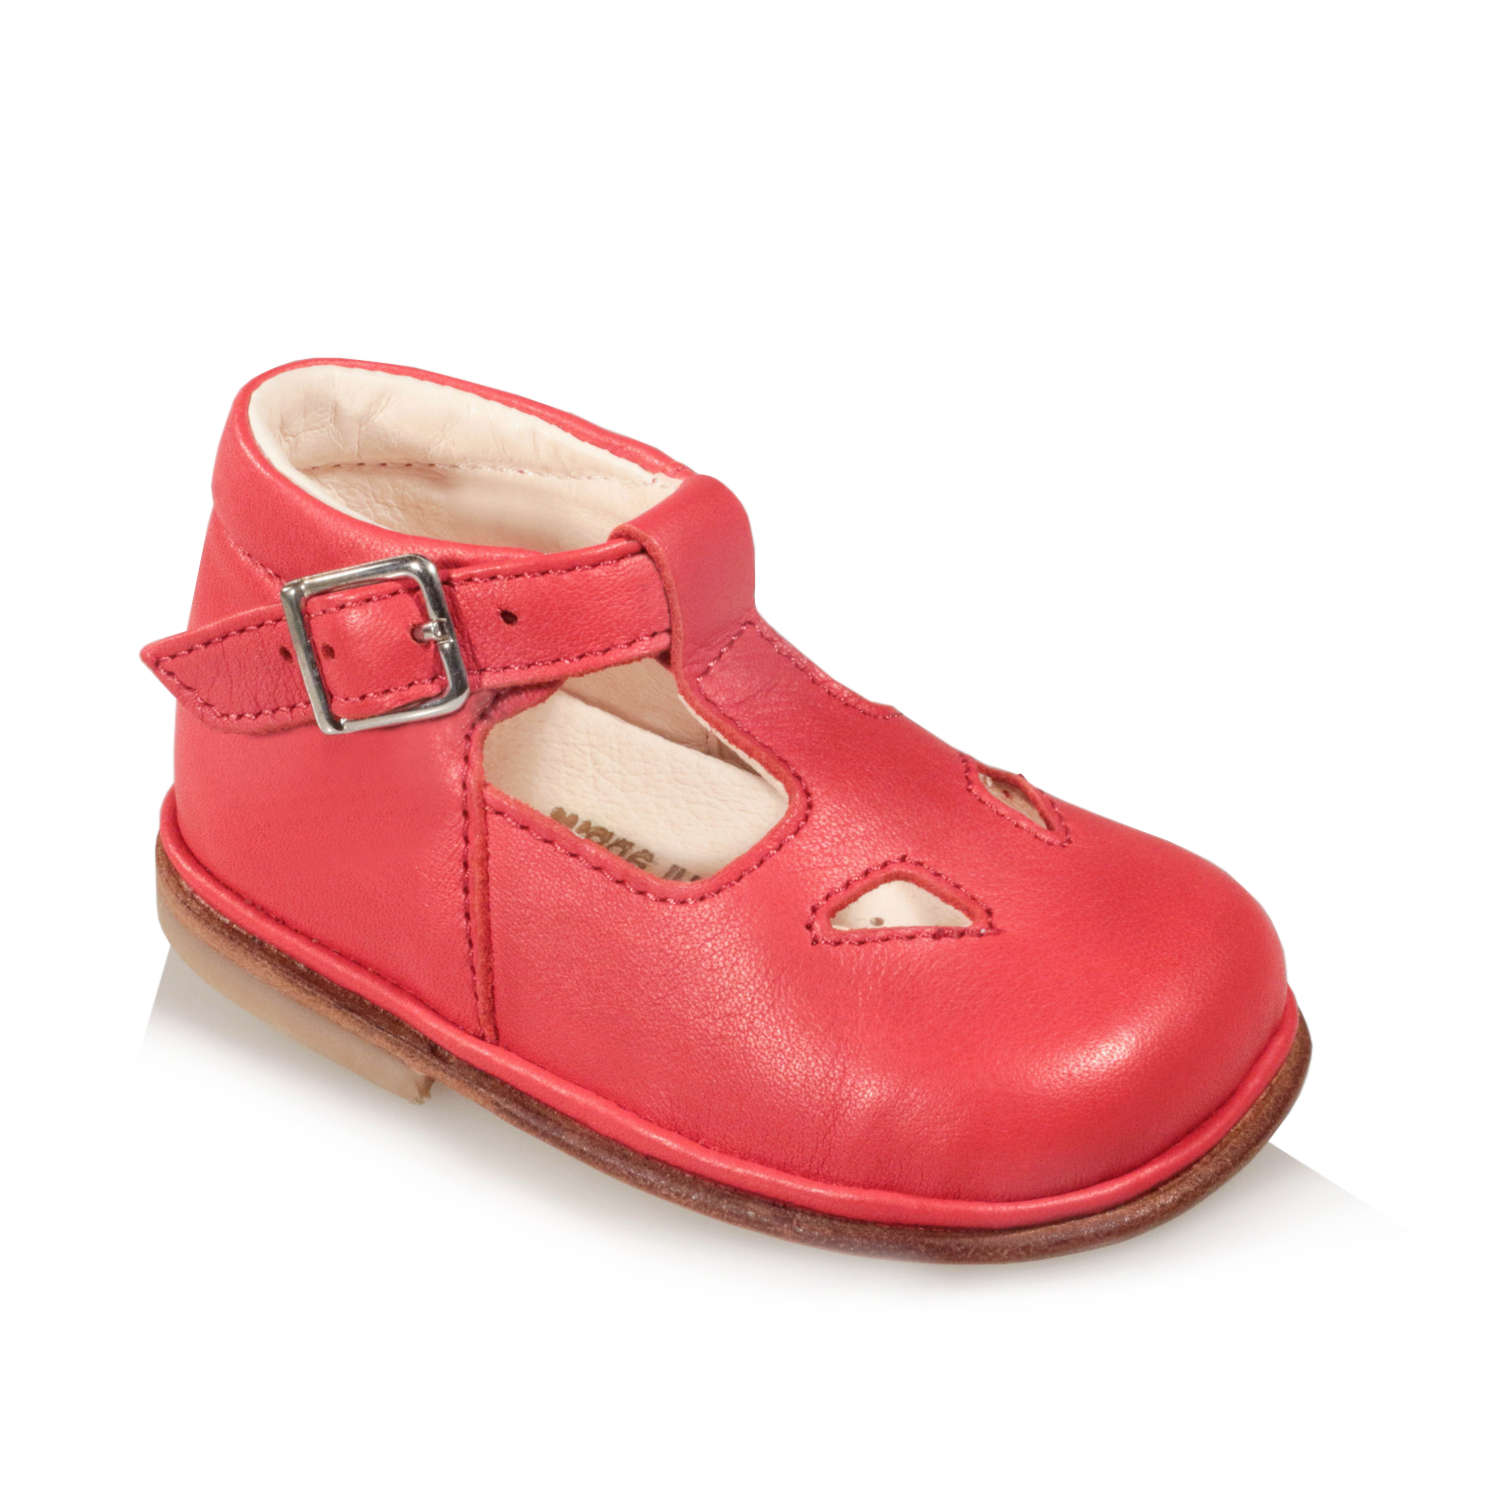 scarpe eleganti bambina rosse